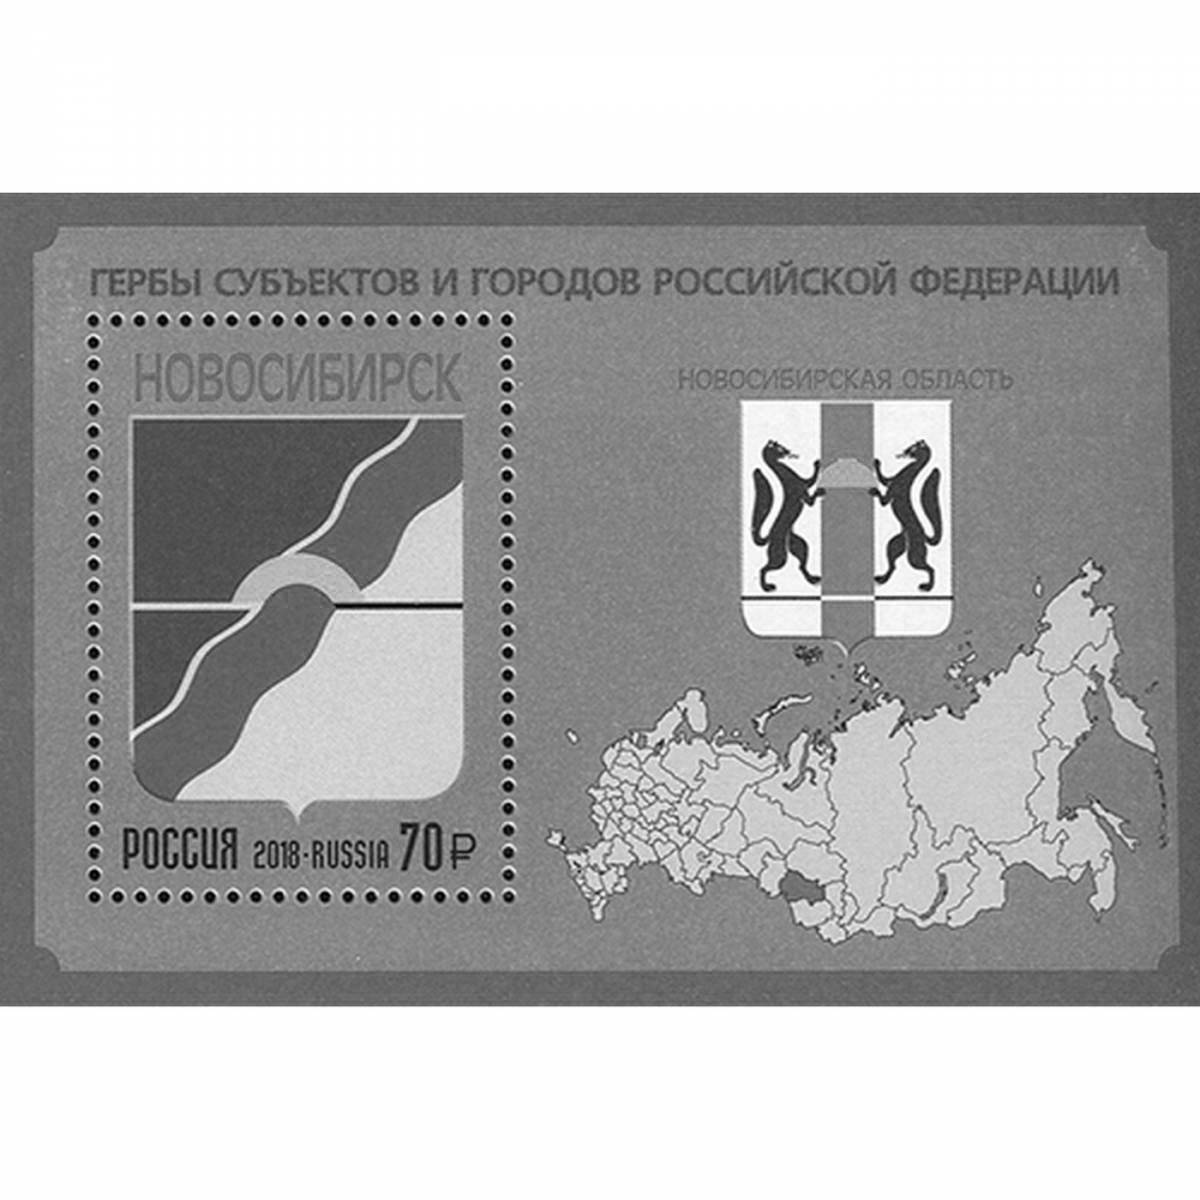 Impressive coloring coat of arms of novosibirsk